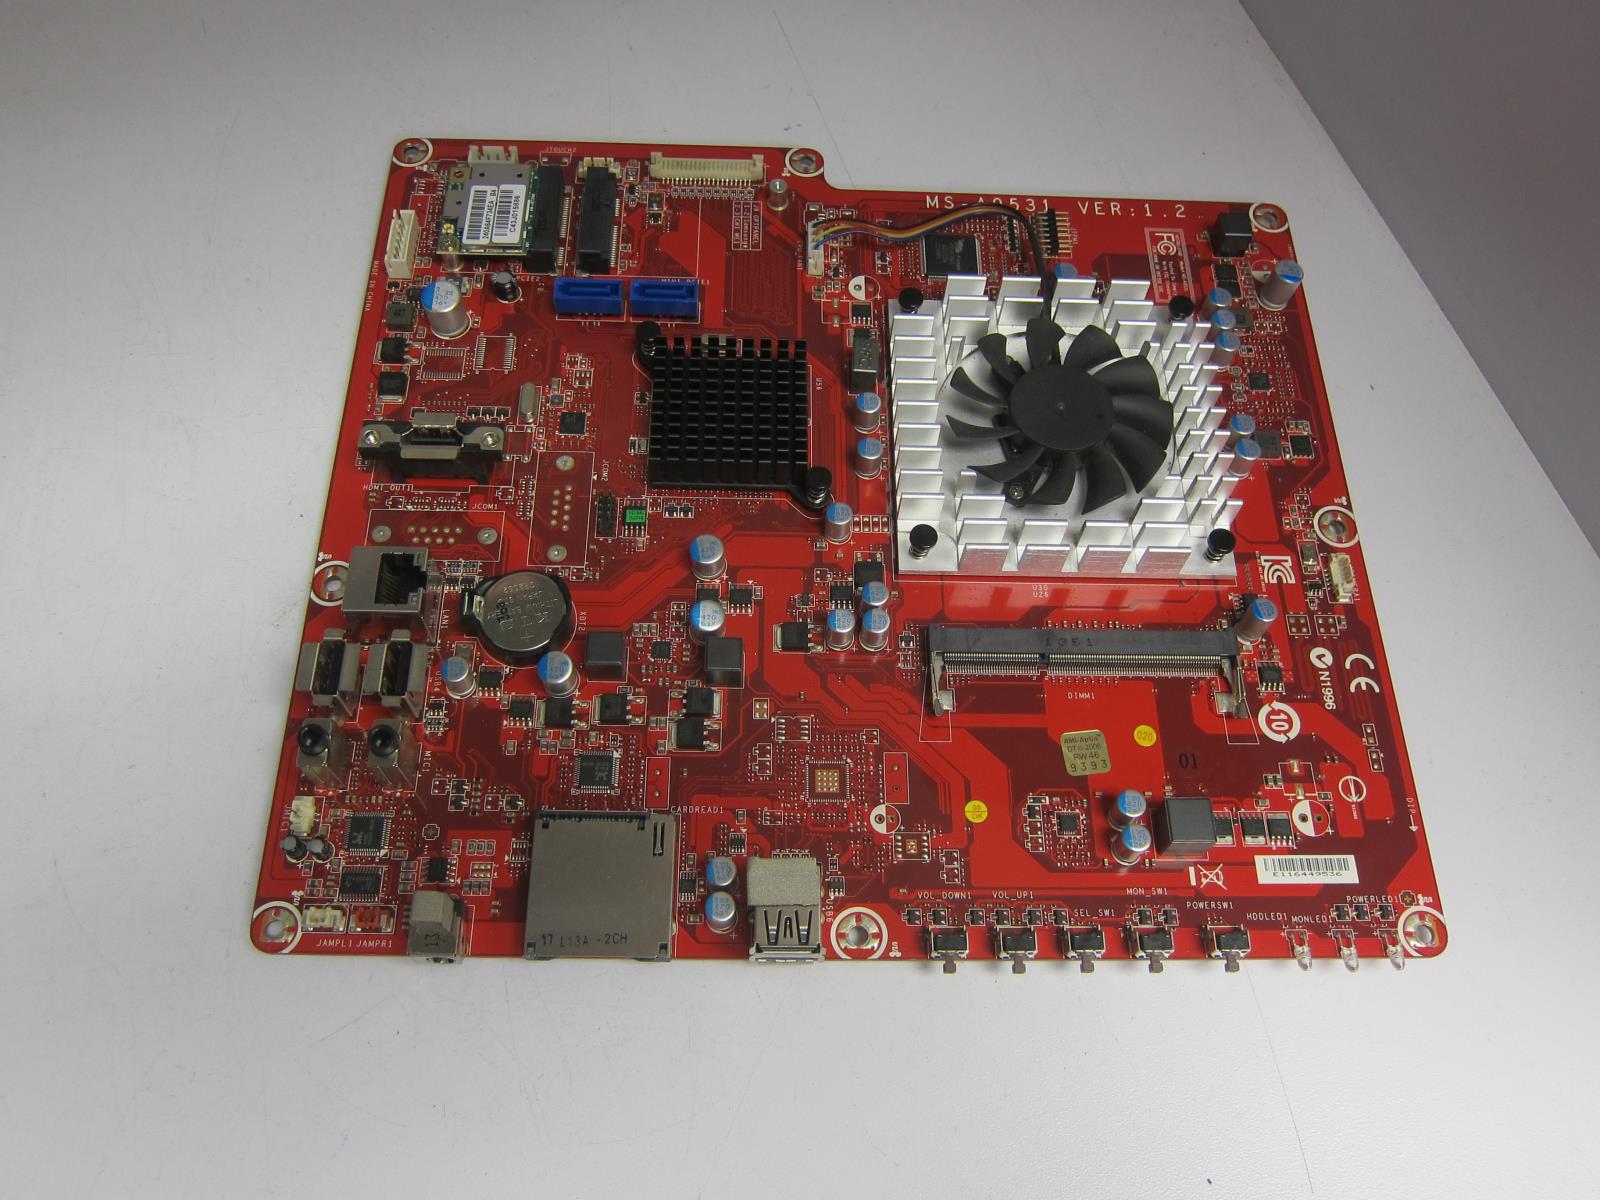 MSI Motherboard MS-A9531 VER 1.2 No CPU | eBay